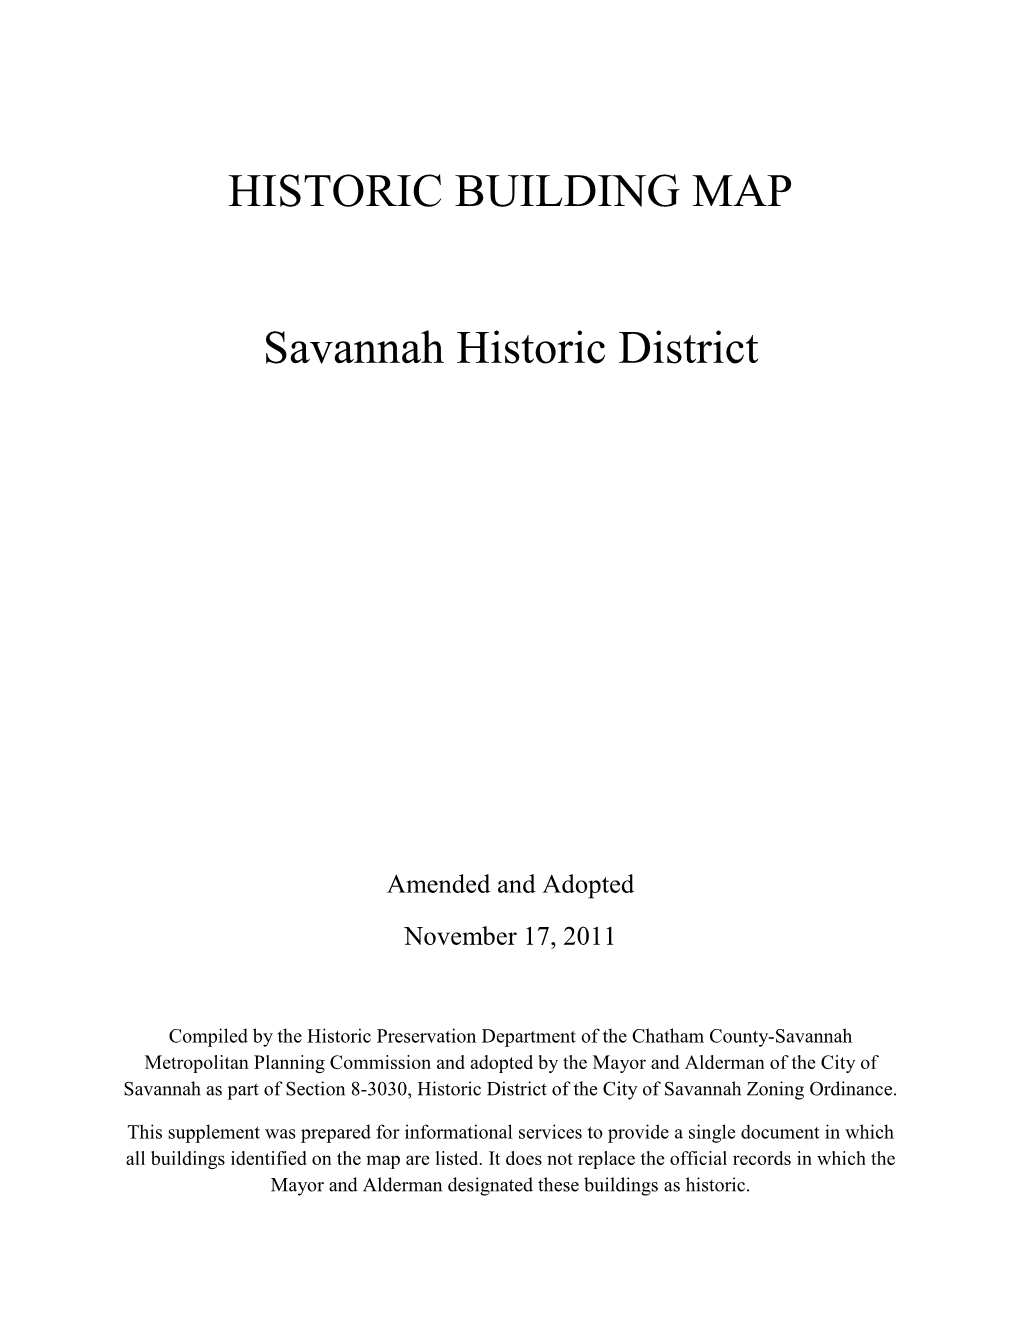 HISTORIC BUILDING MAP Savannah Historic District